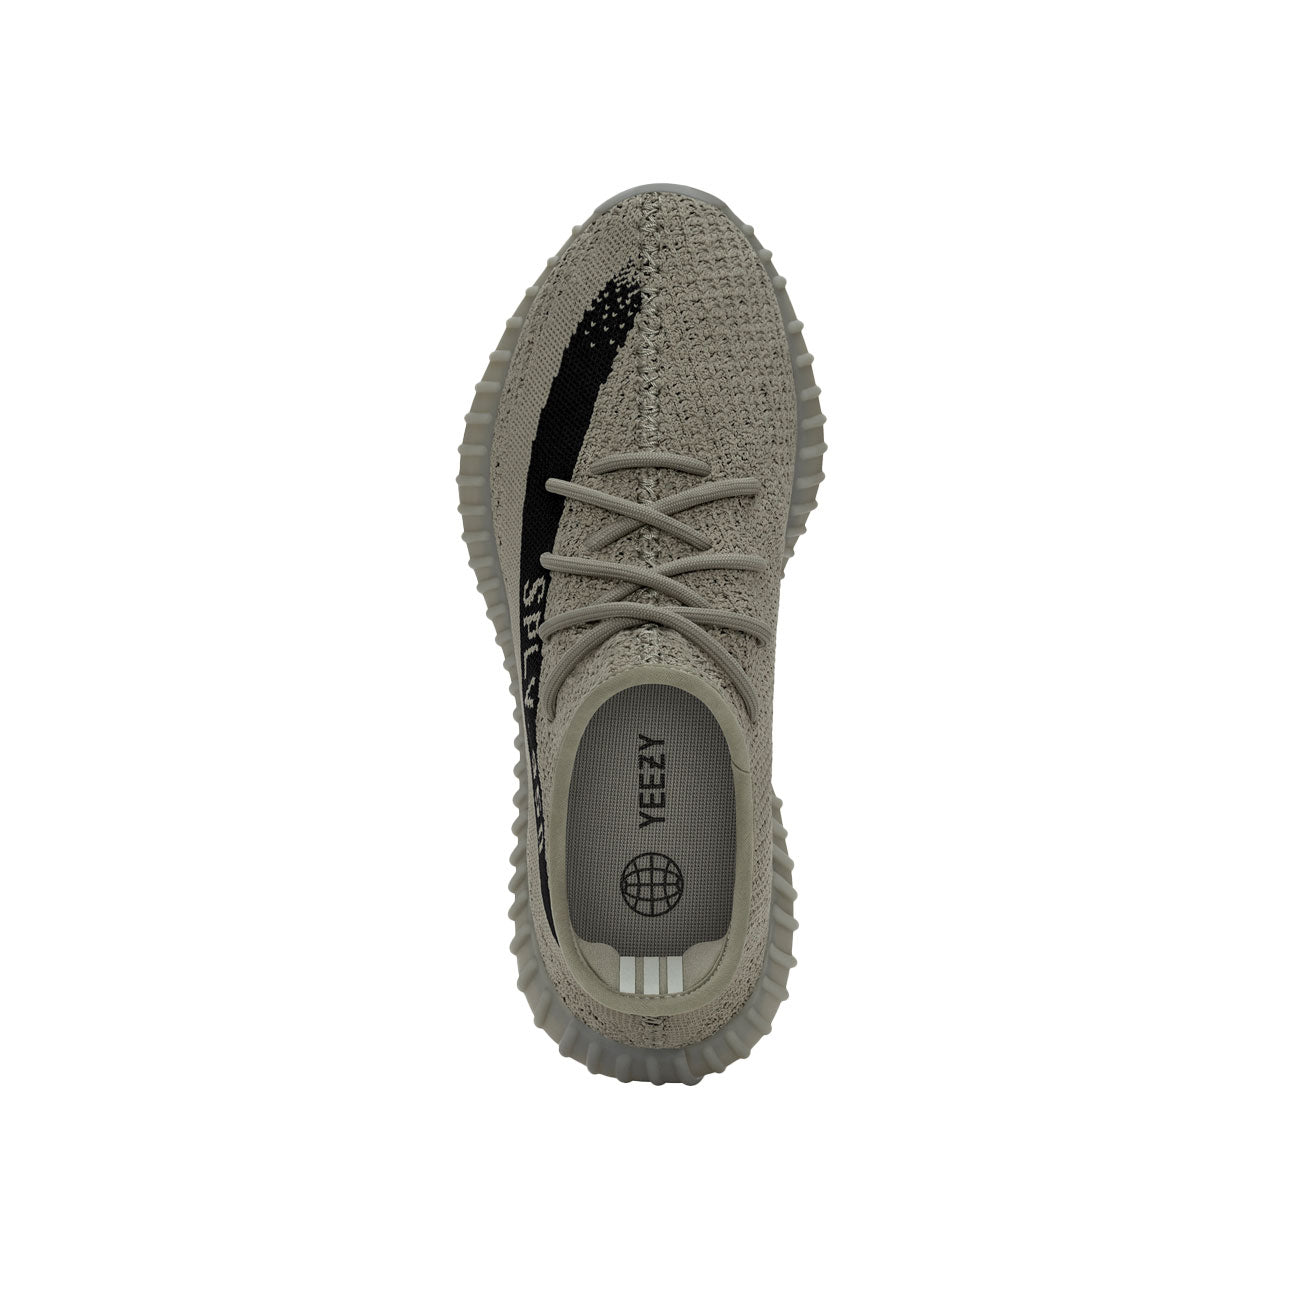 adidas Yeezy Boost 350 V2 "Granite" (Grau / Schwarz)  - Allike Store